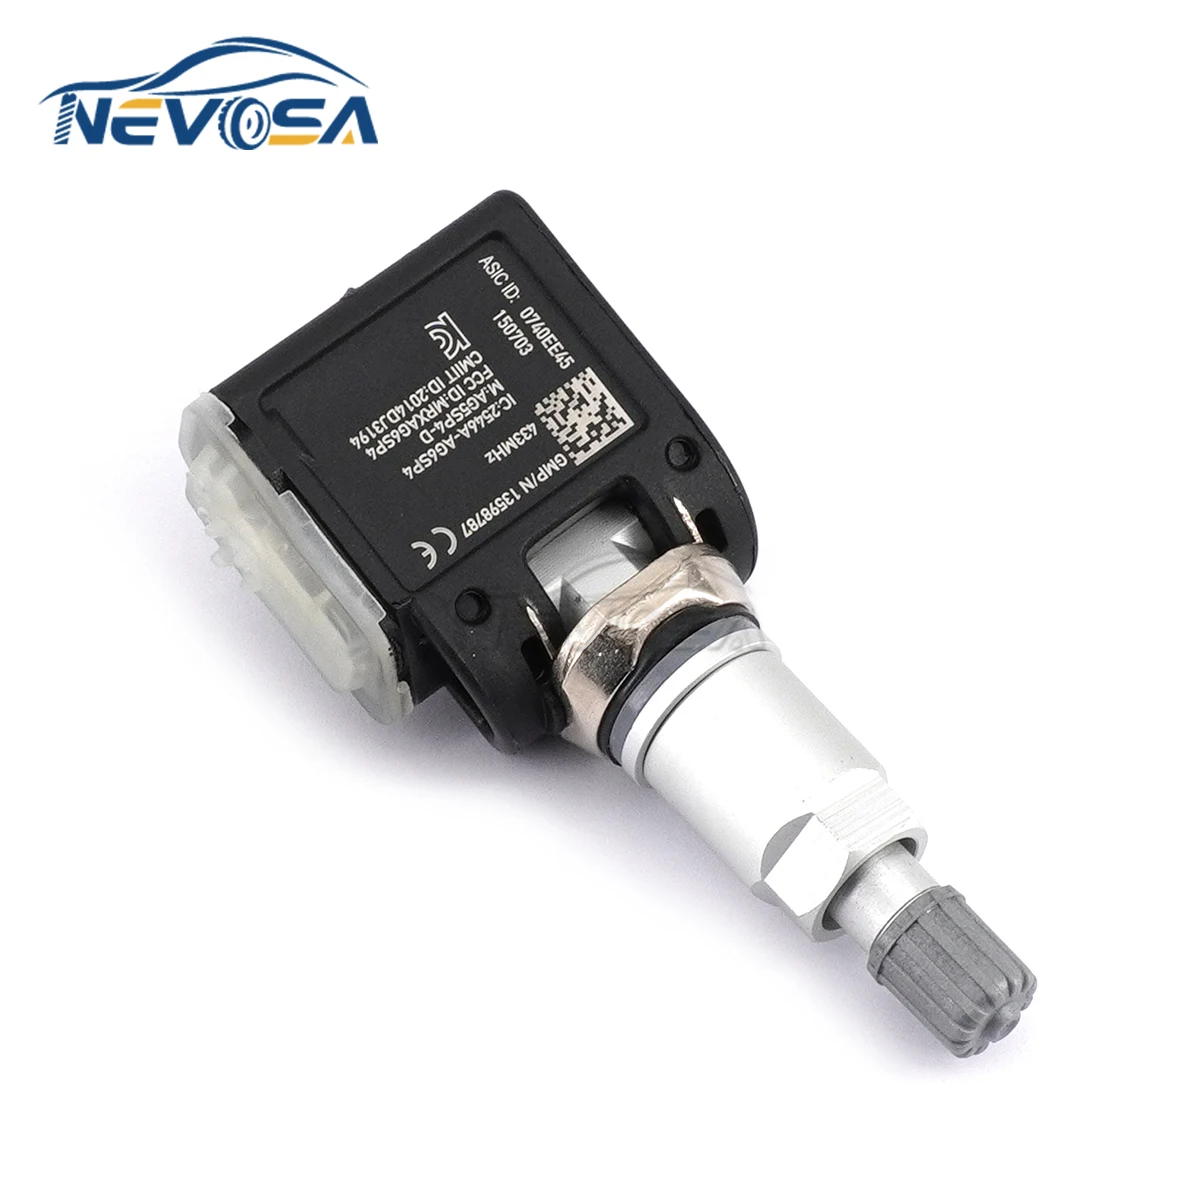 Nevosa 13598787 315MHZ באיכות גבוהה לחץ צמיגים חיישן TPM חיישן עבור שברולט ביואיק קדילאק אופל ווקסהול ATS CTS קמארו